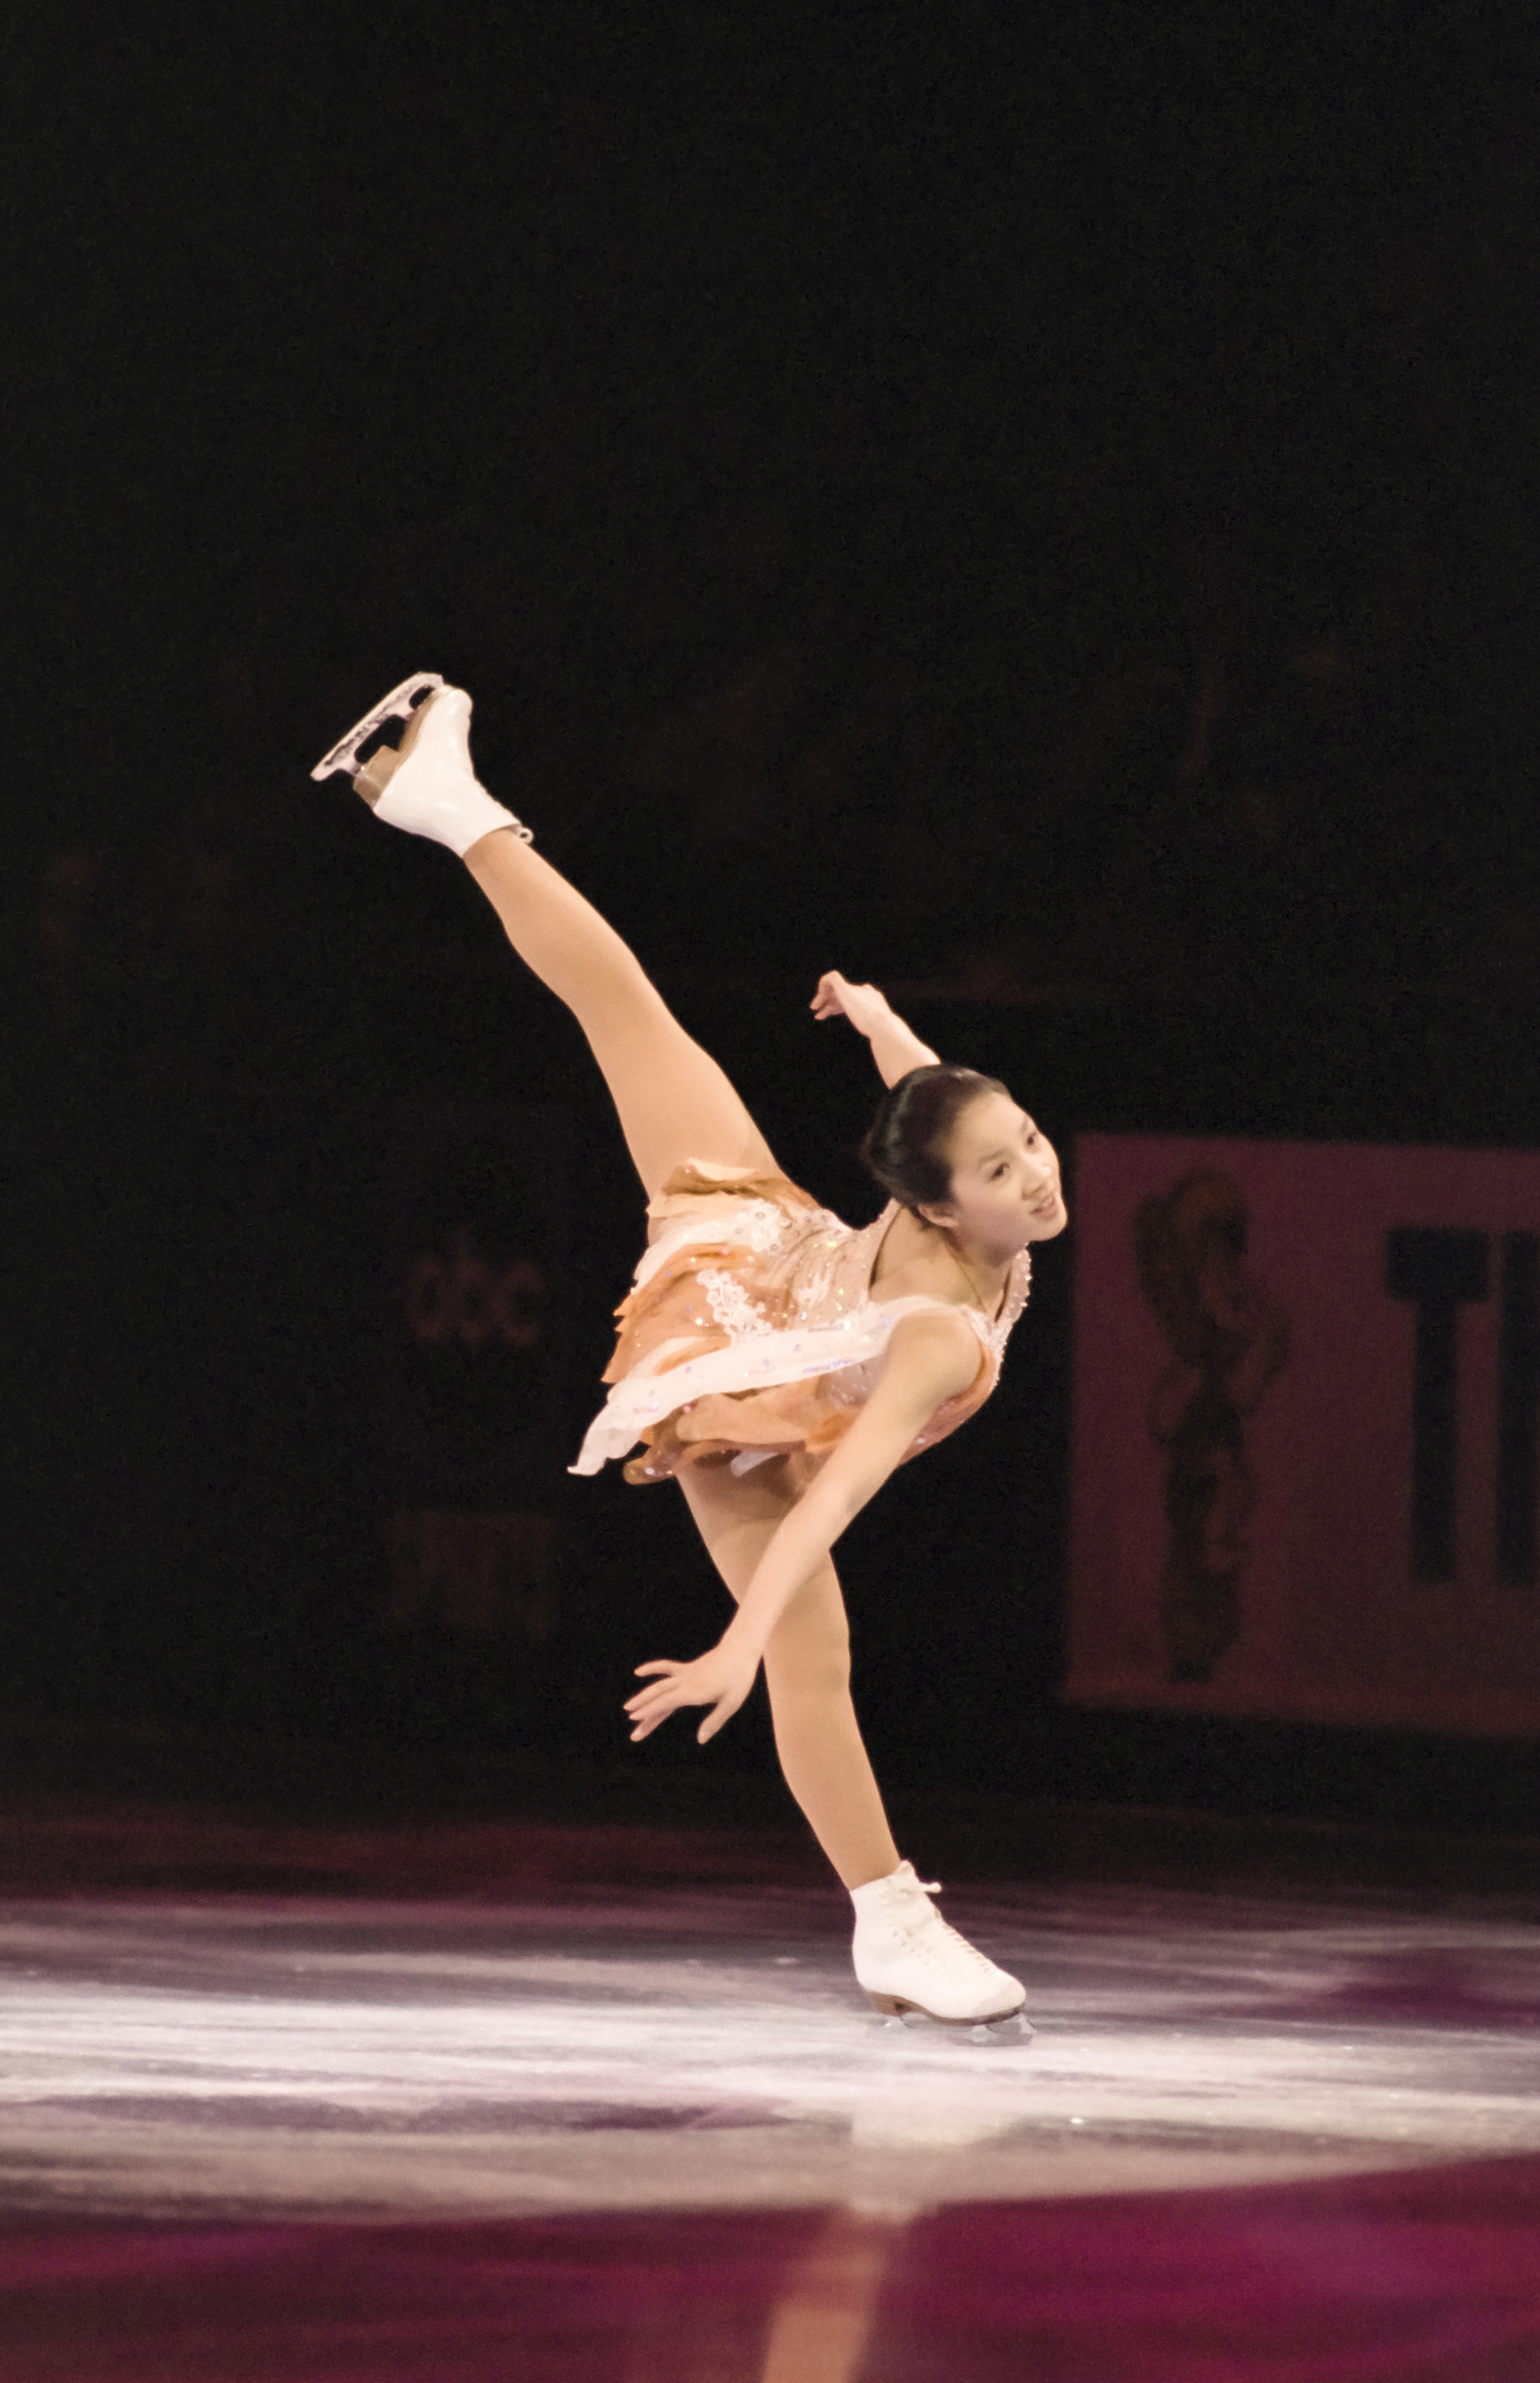 Michelle Kwan ice skating